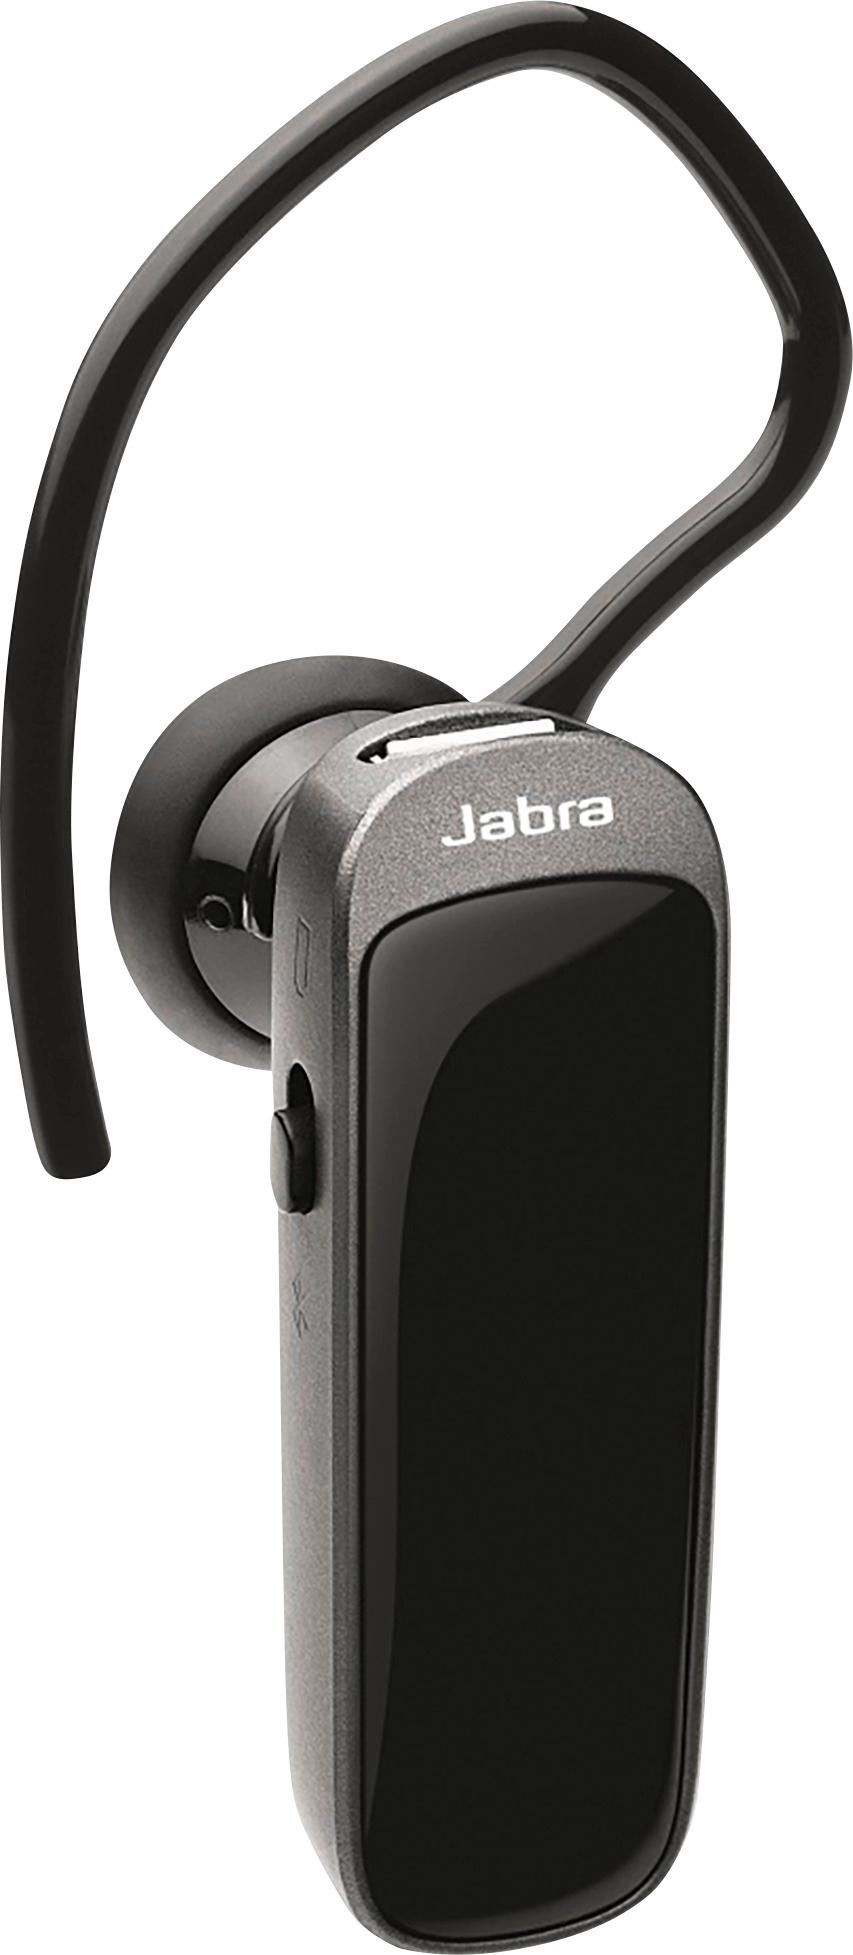 jabra bluetooth headset